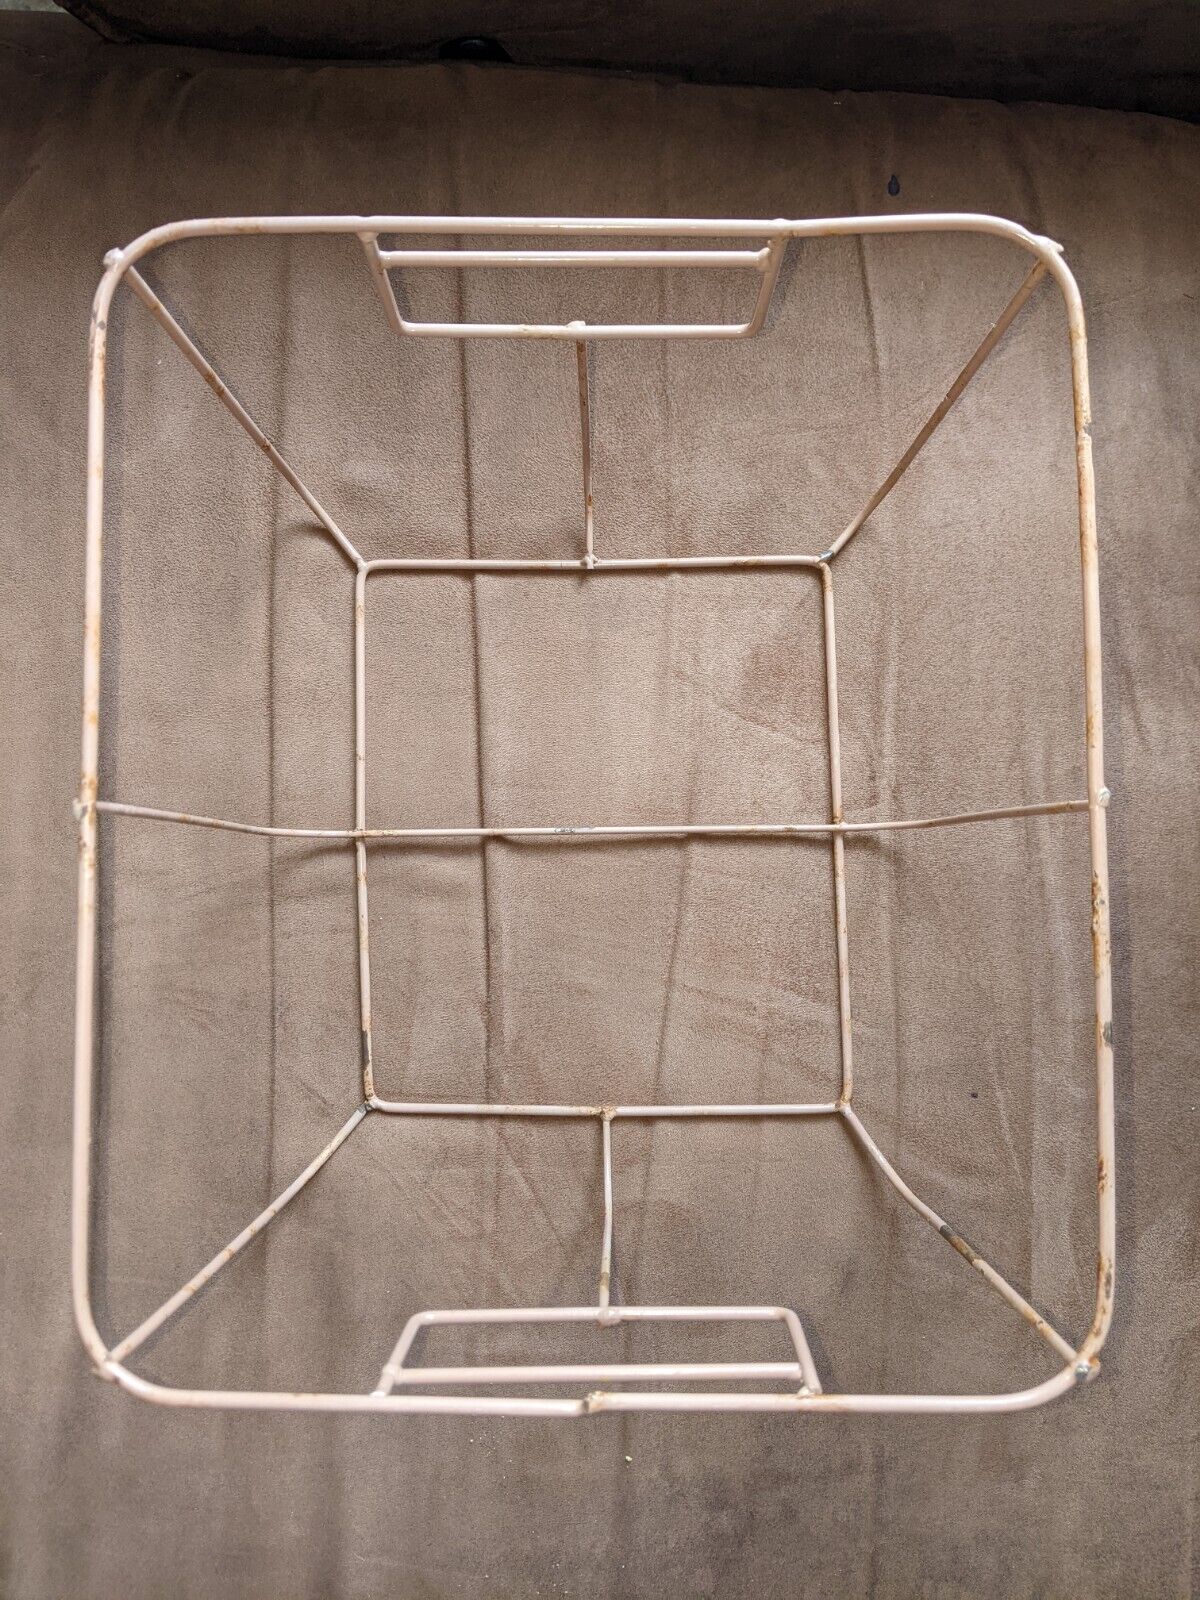 Basket Weaving Metal Frame 10.5 In Wide 9 In Deep And 7.5 In Tall